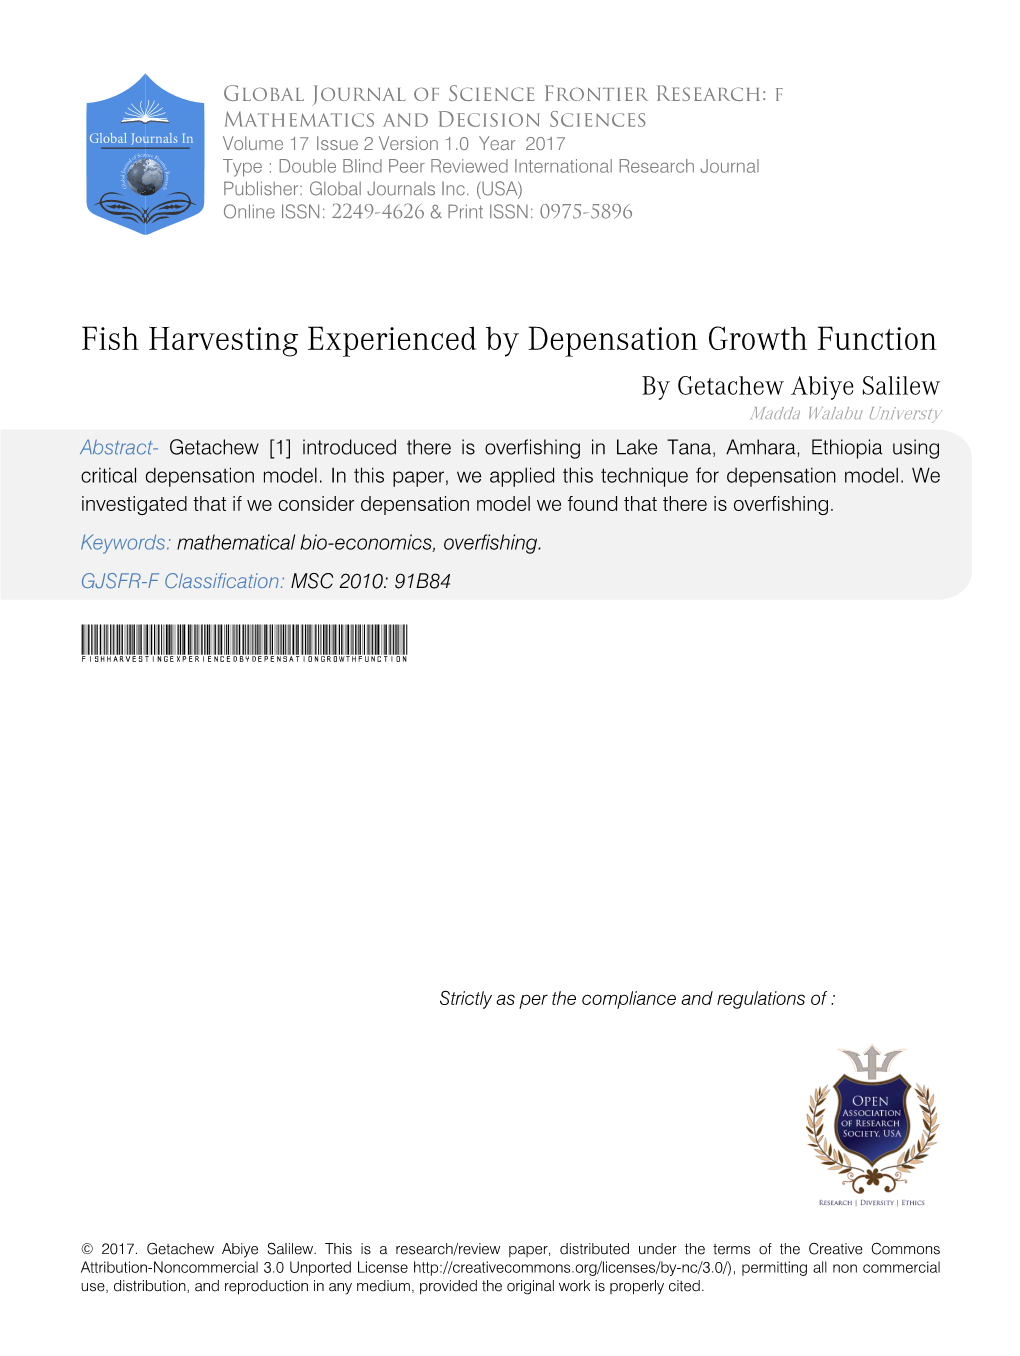 Fishharvestingexperiencedbyde